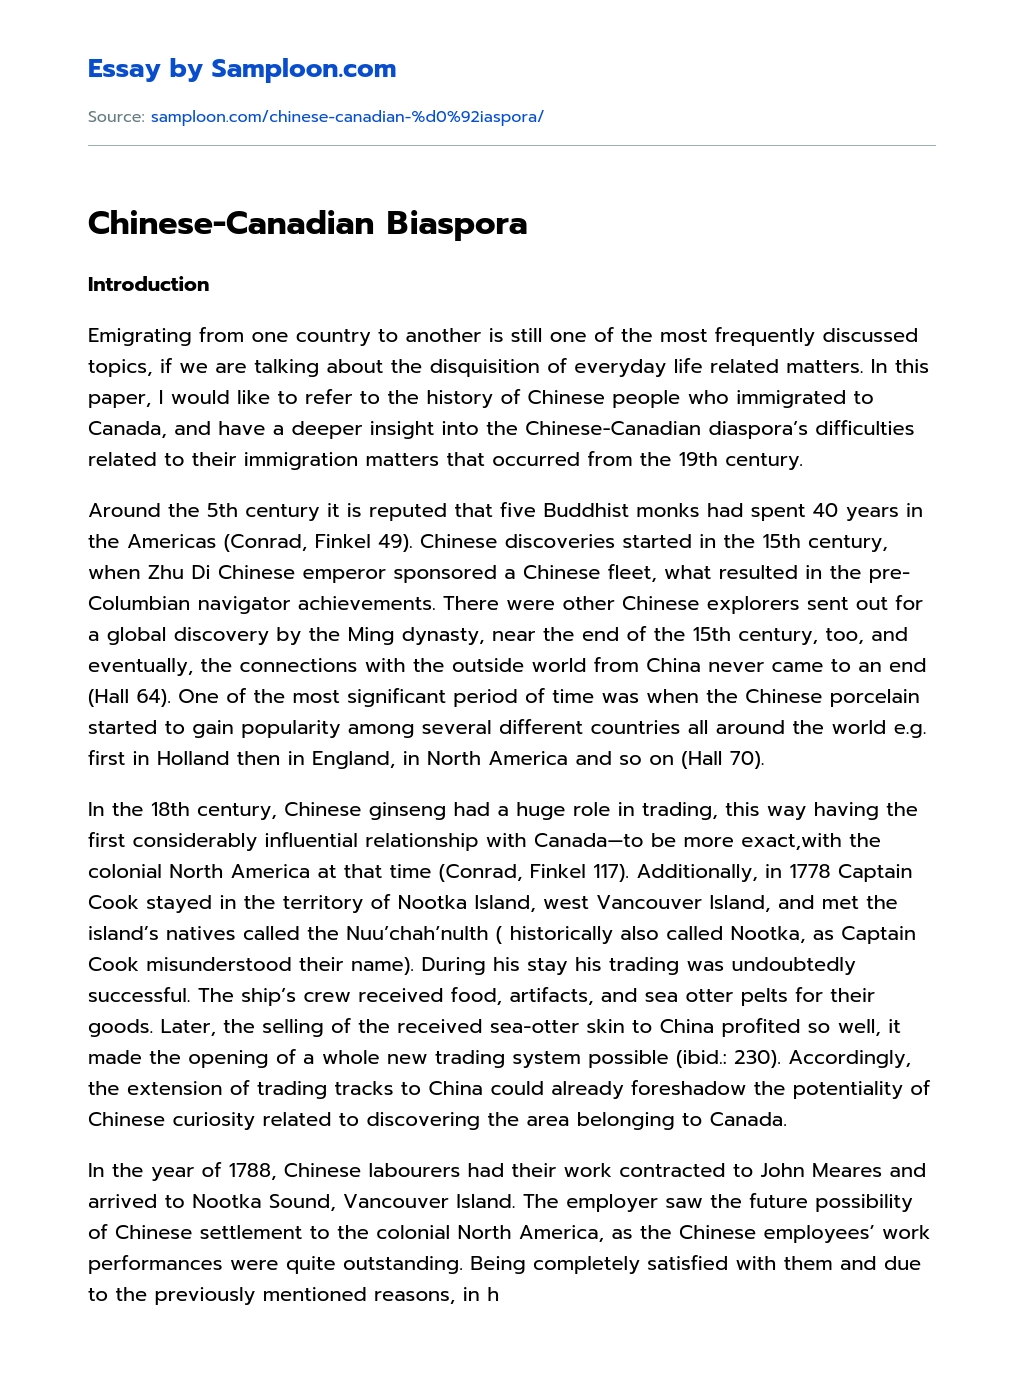 Chinese-Canadian Вiaspora essay